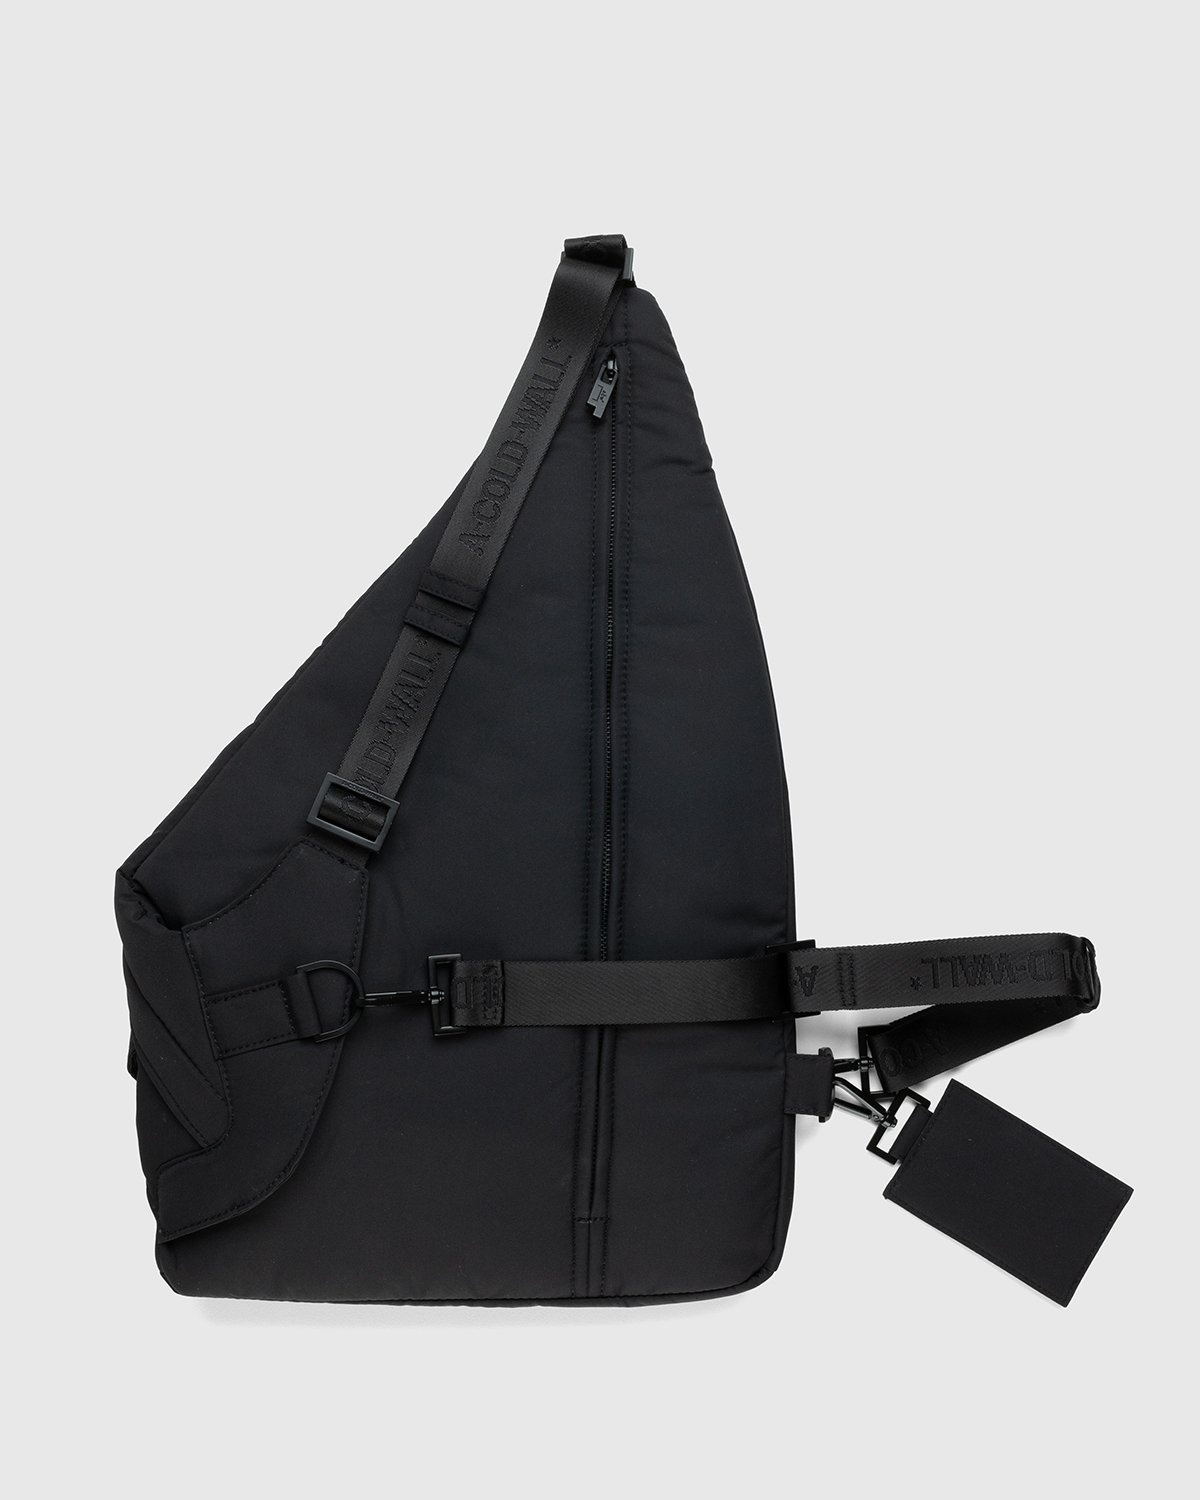 A-Cold-Wall* – Semi Gilet Body Bag Black - Bags - Black - Image 2